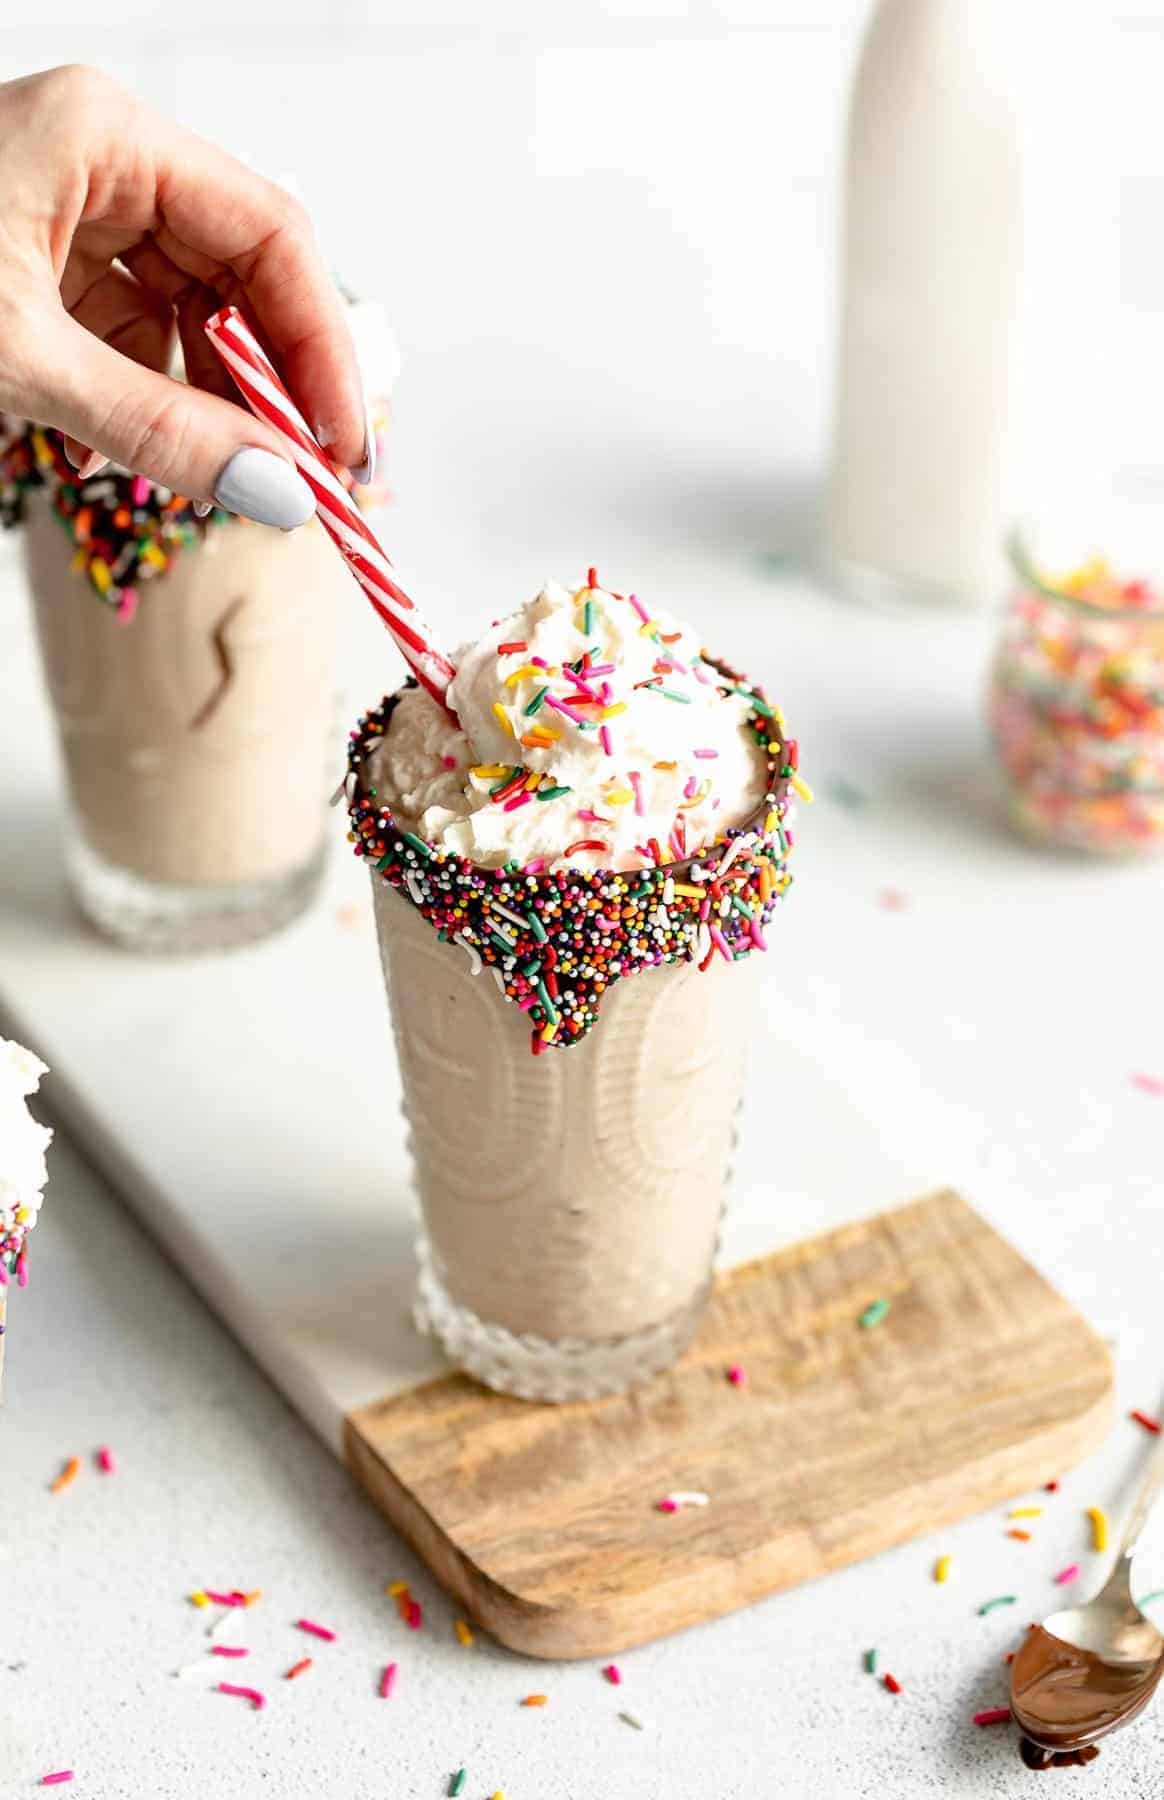 How to Make Vanilla Milkshake: A Creamy and Sweet Treat